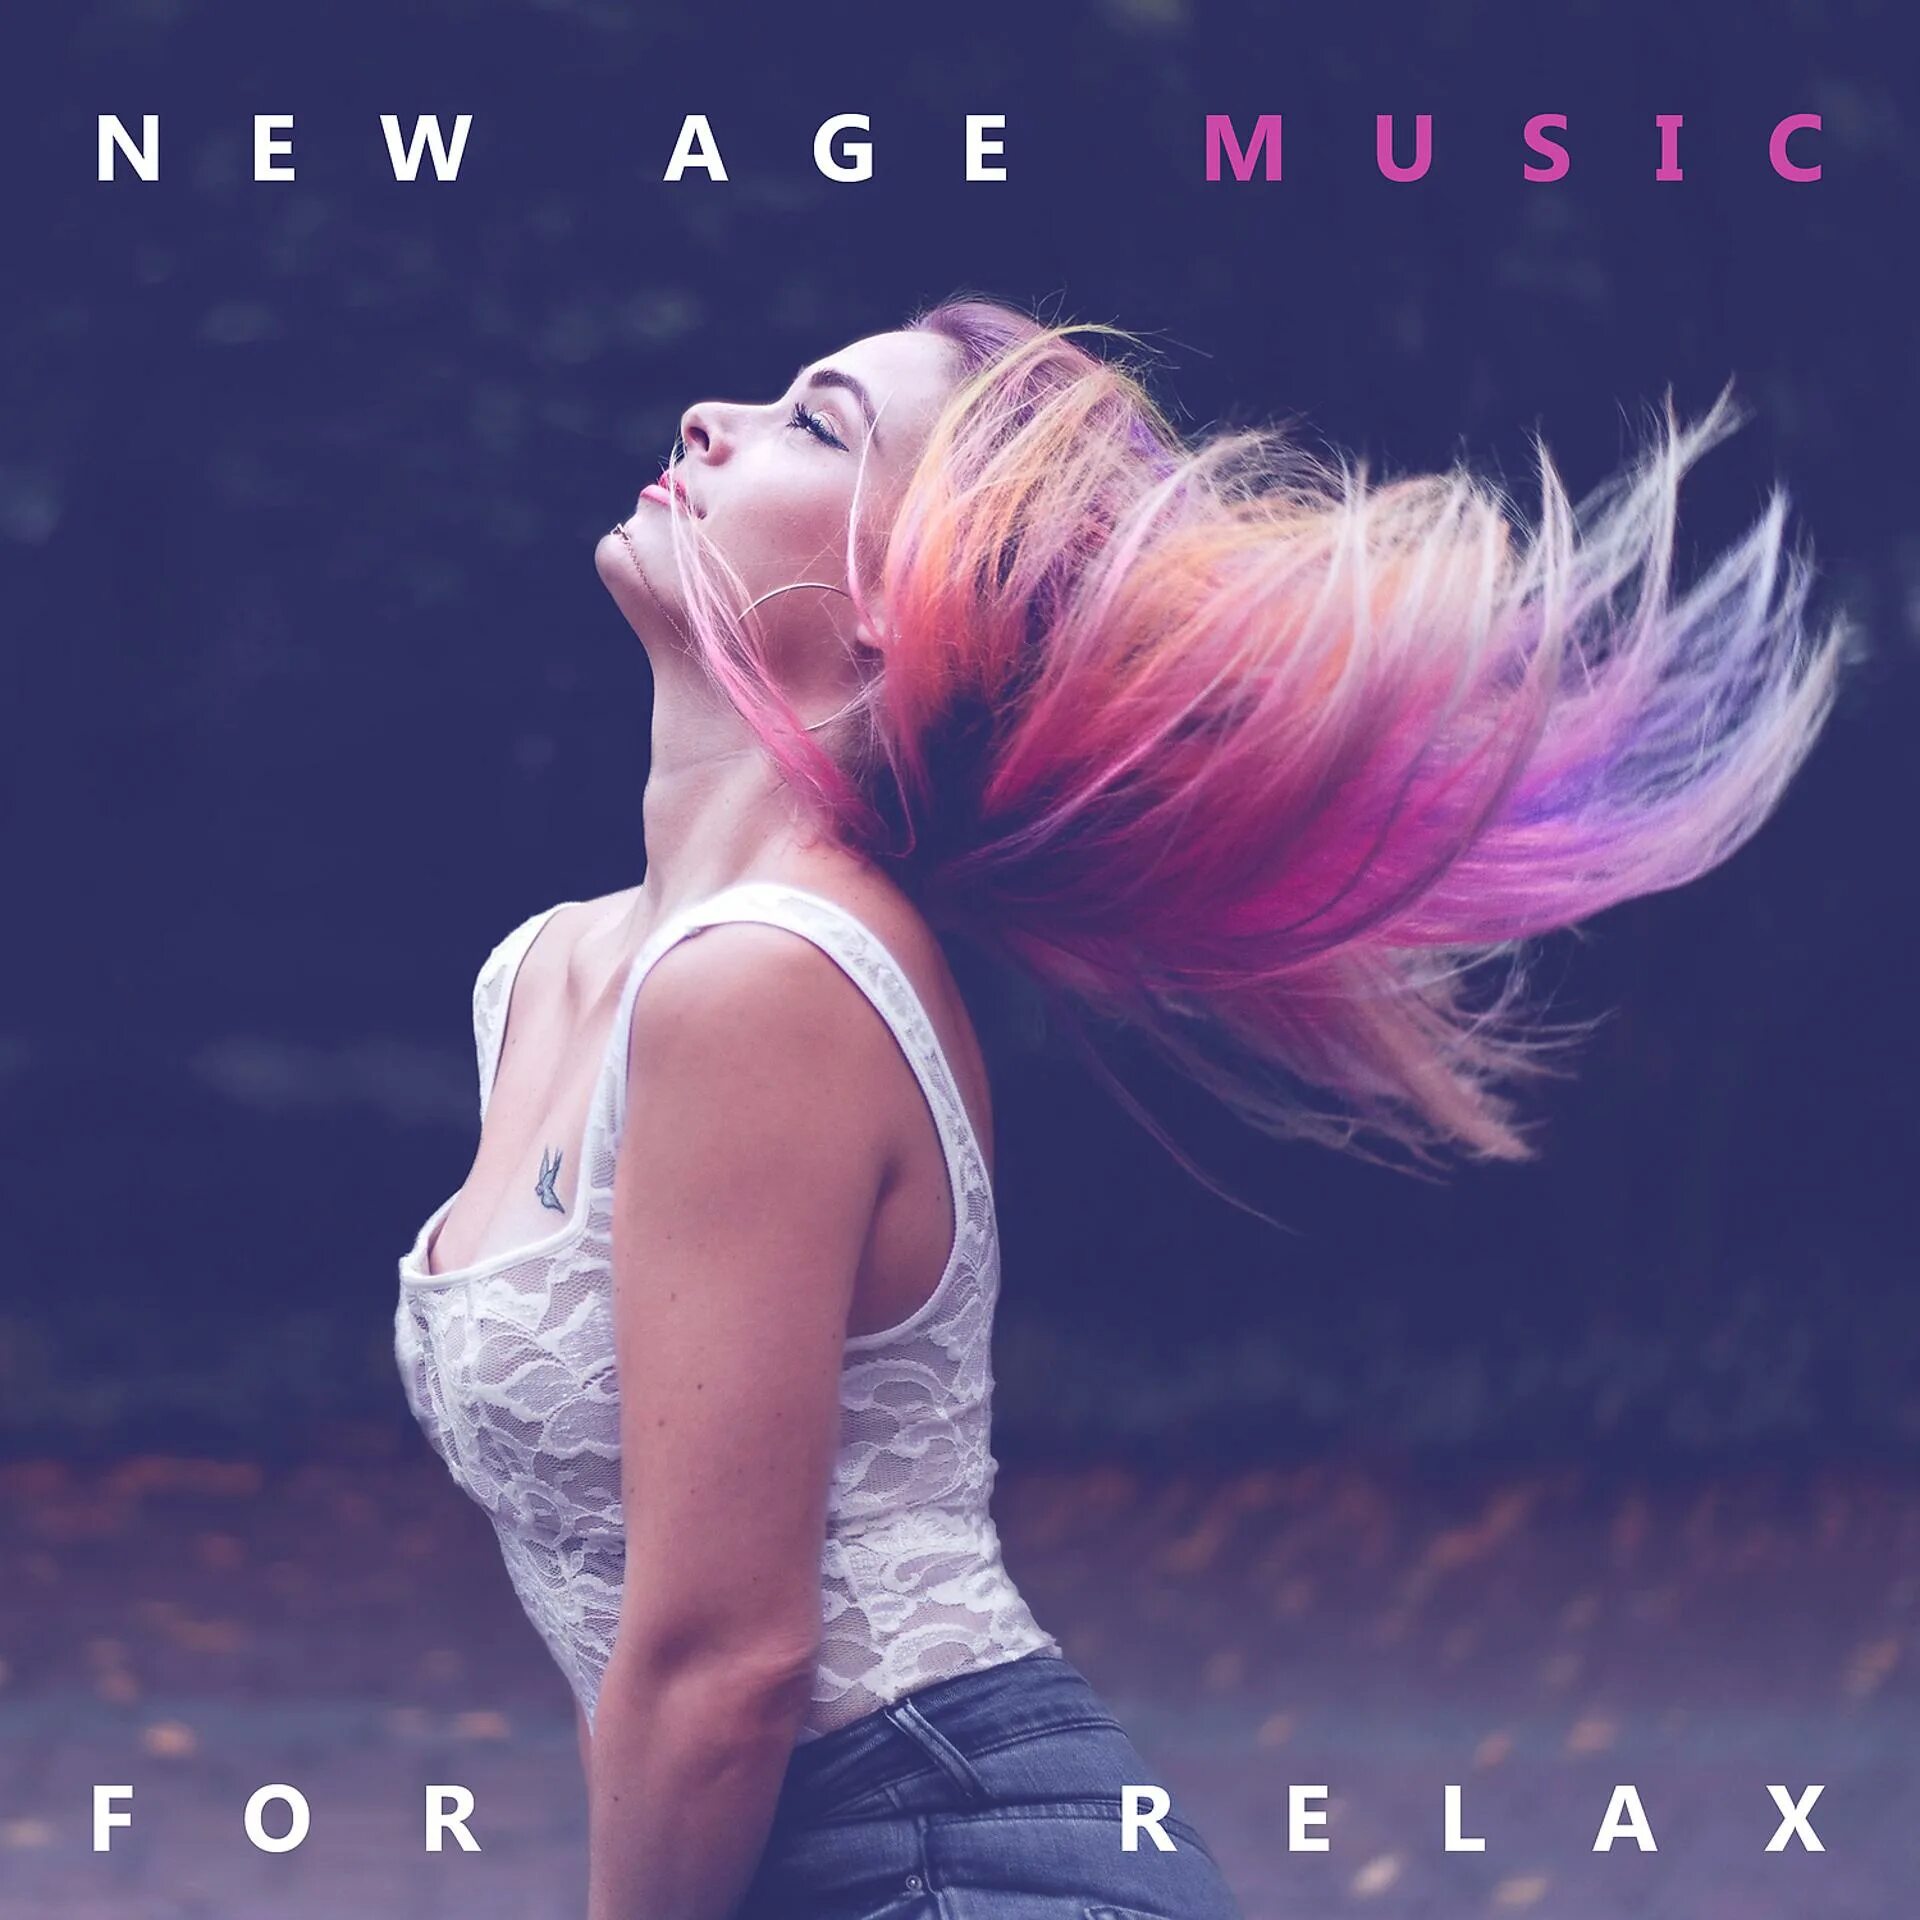 "Нью-эйдж". New age музыка обложки альбомов. Dazelee New age. Enza музыкант New age. Музыка new age